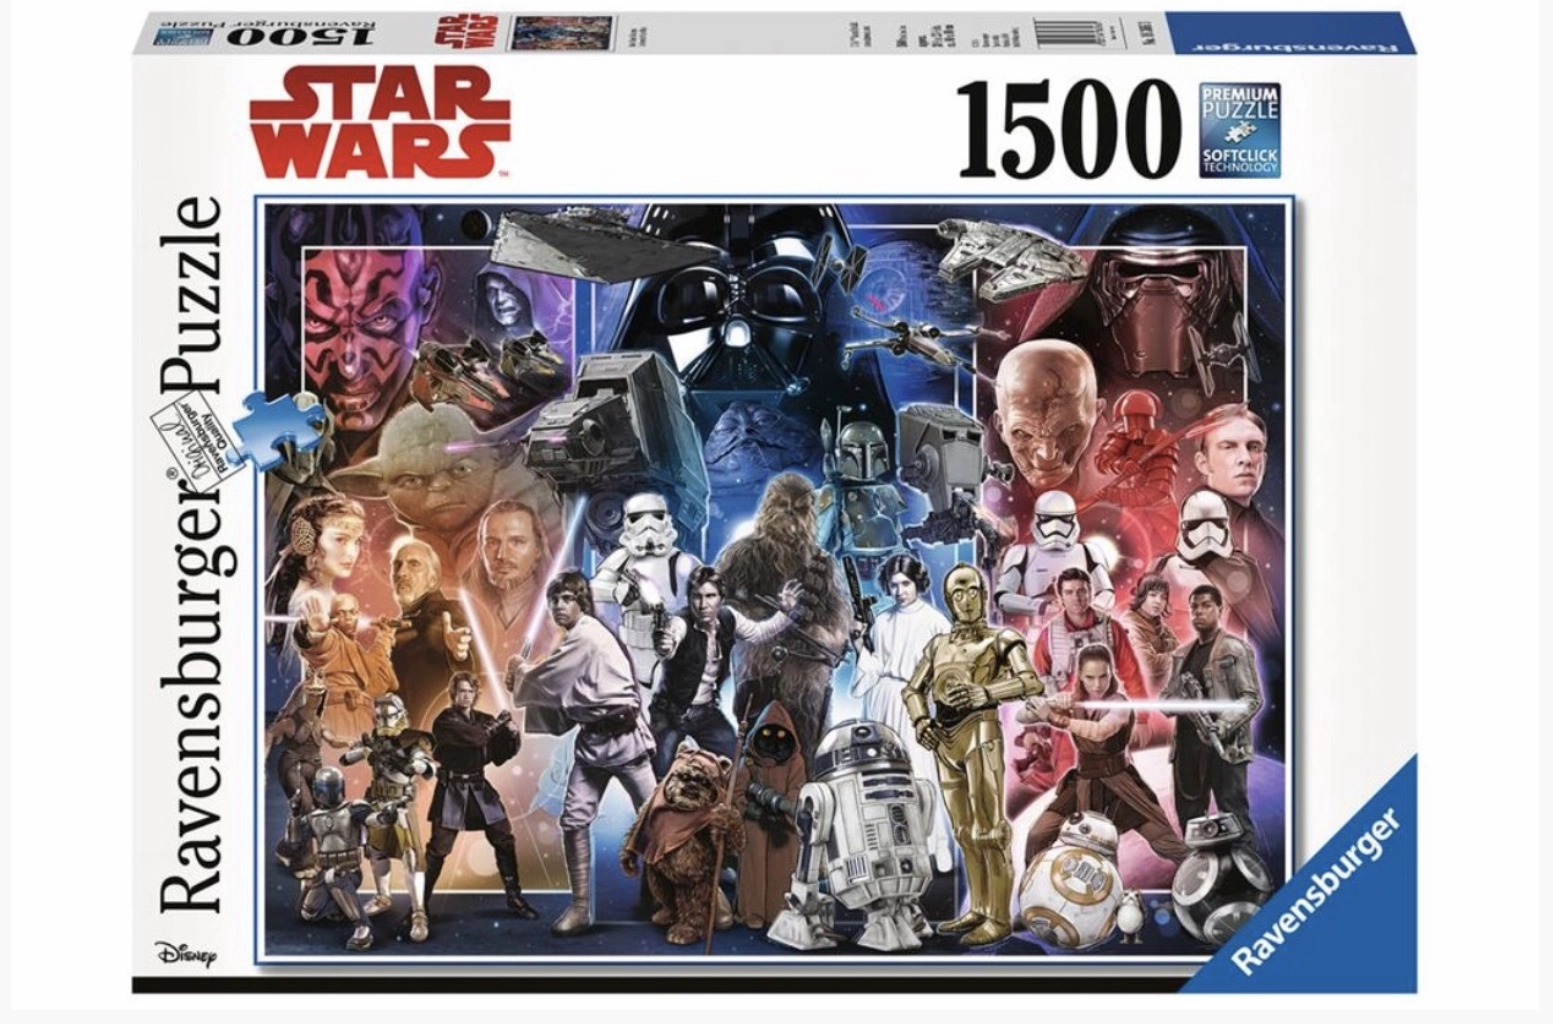 Star Wars karakterek puzzle 1500 darabos